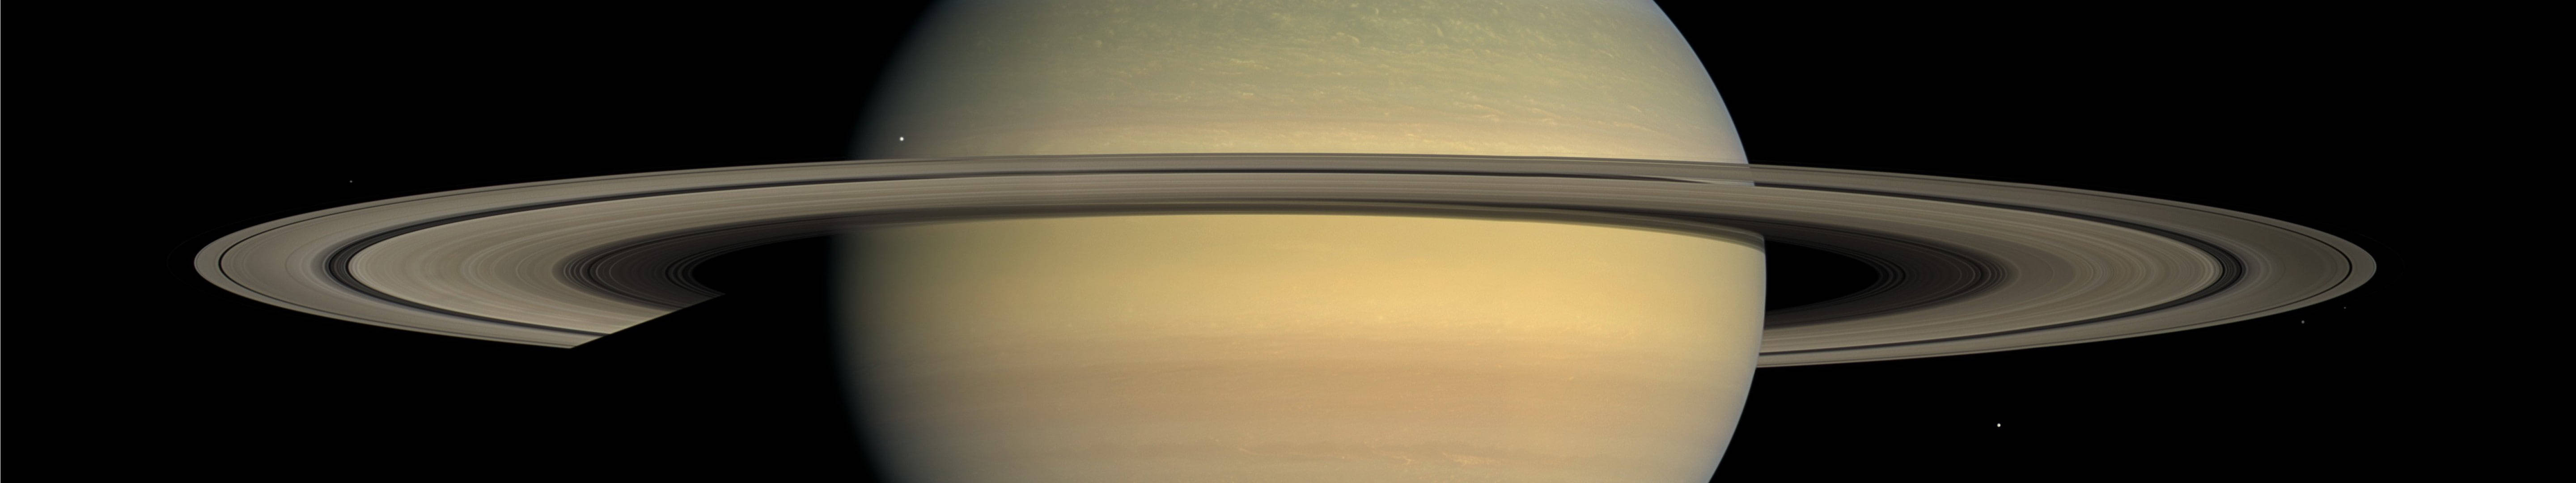 Dual Monitor Saturn 4k Background